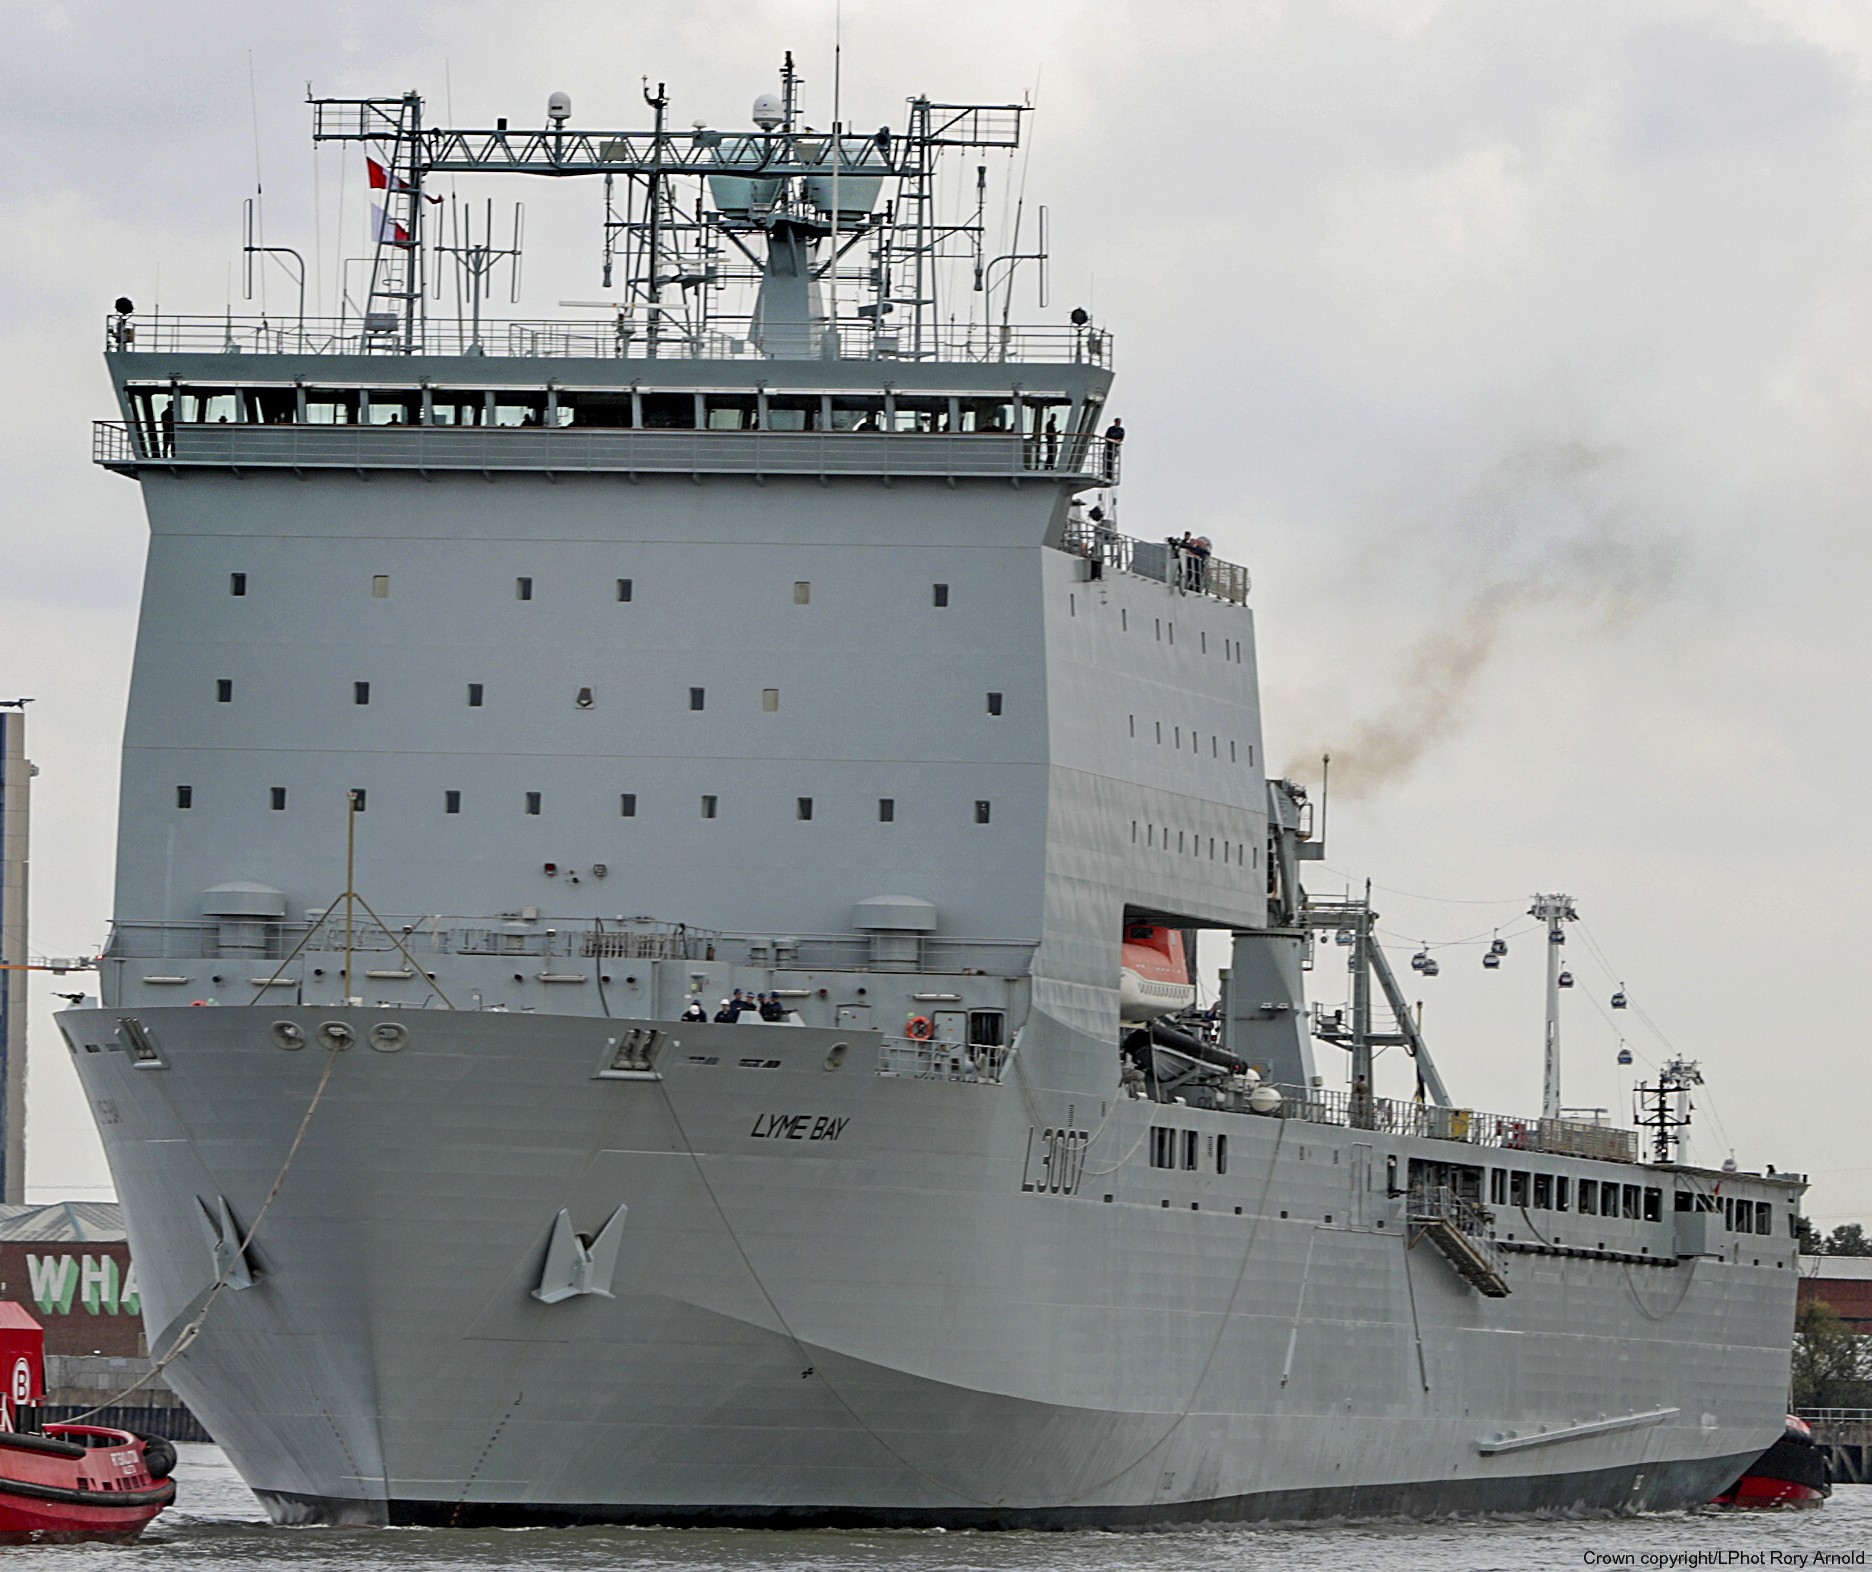 l-3007 rfa lyme bay dock landing ship royal fleet auxilary navy 27